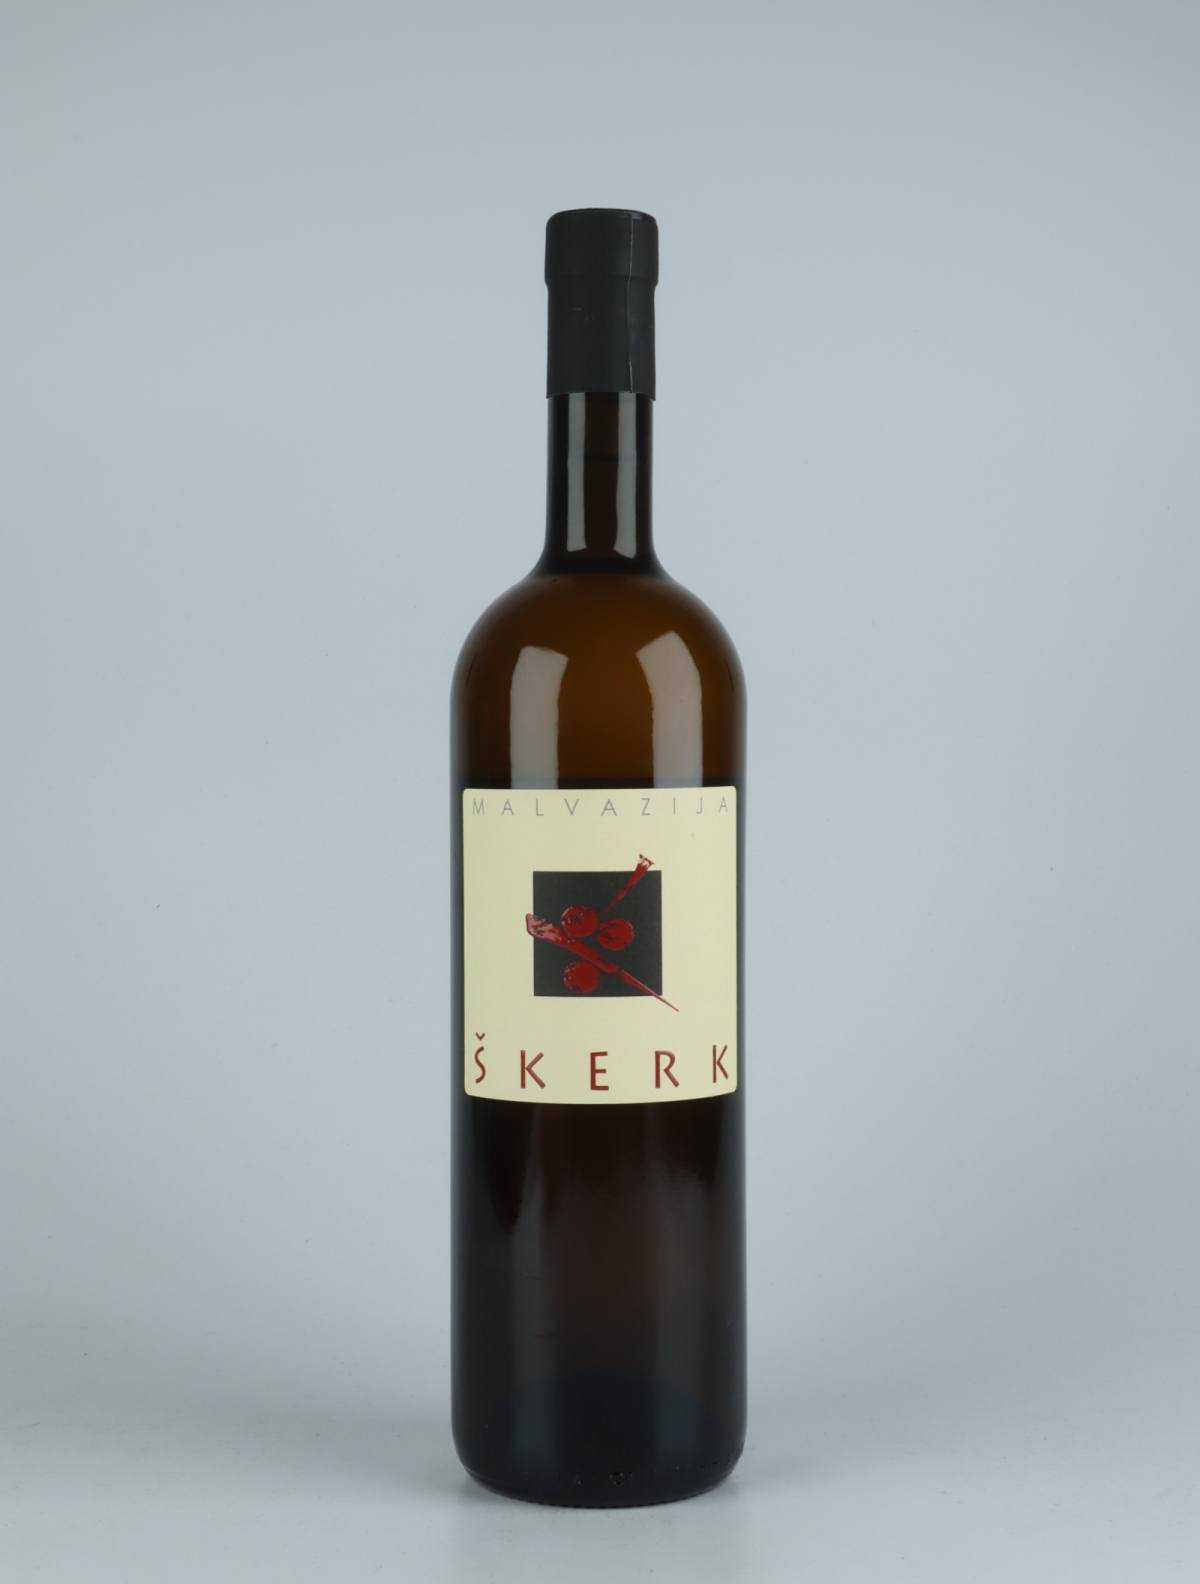 A bottle 2019 Malvazija Orange wine from Skerk, Friuli in Italy